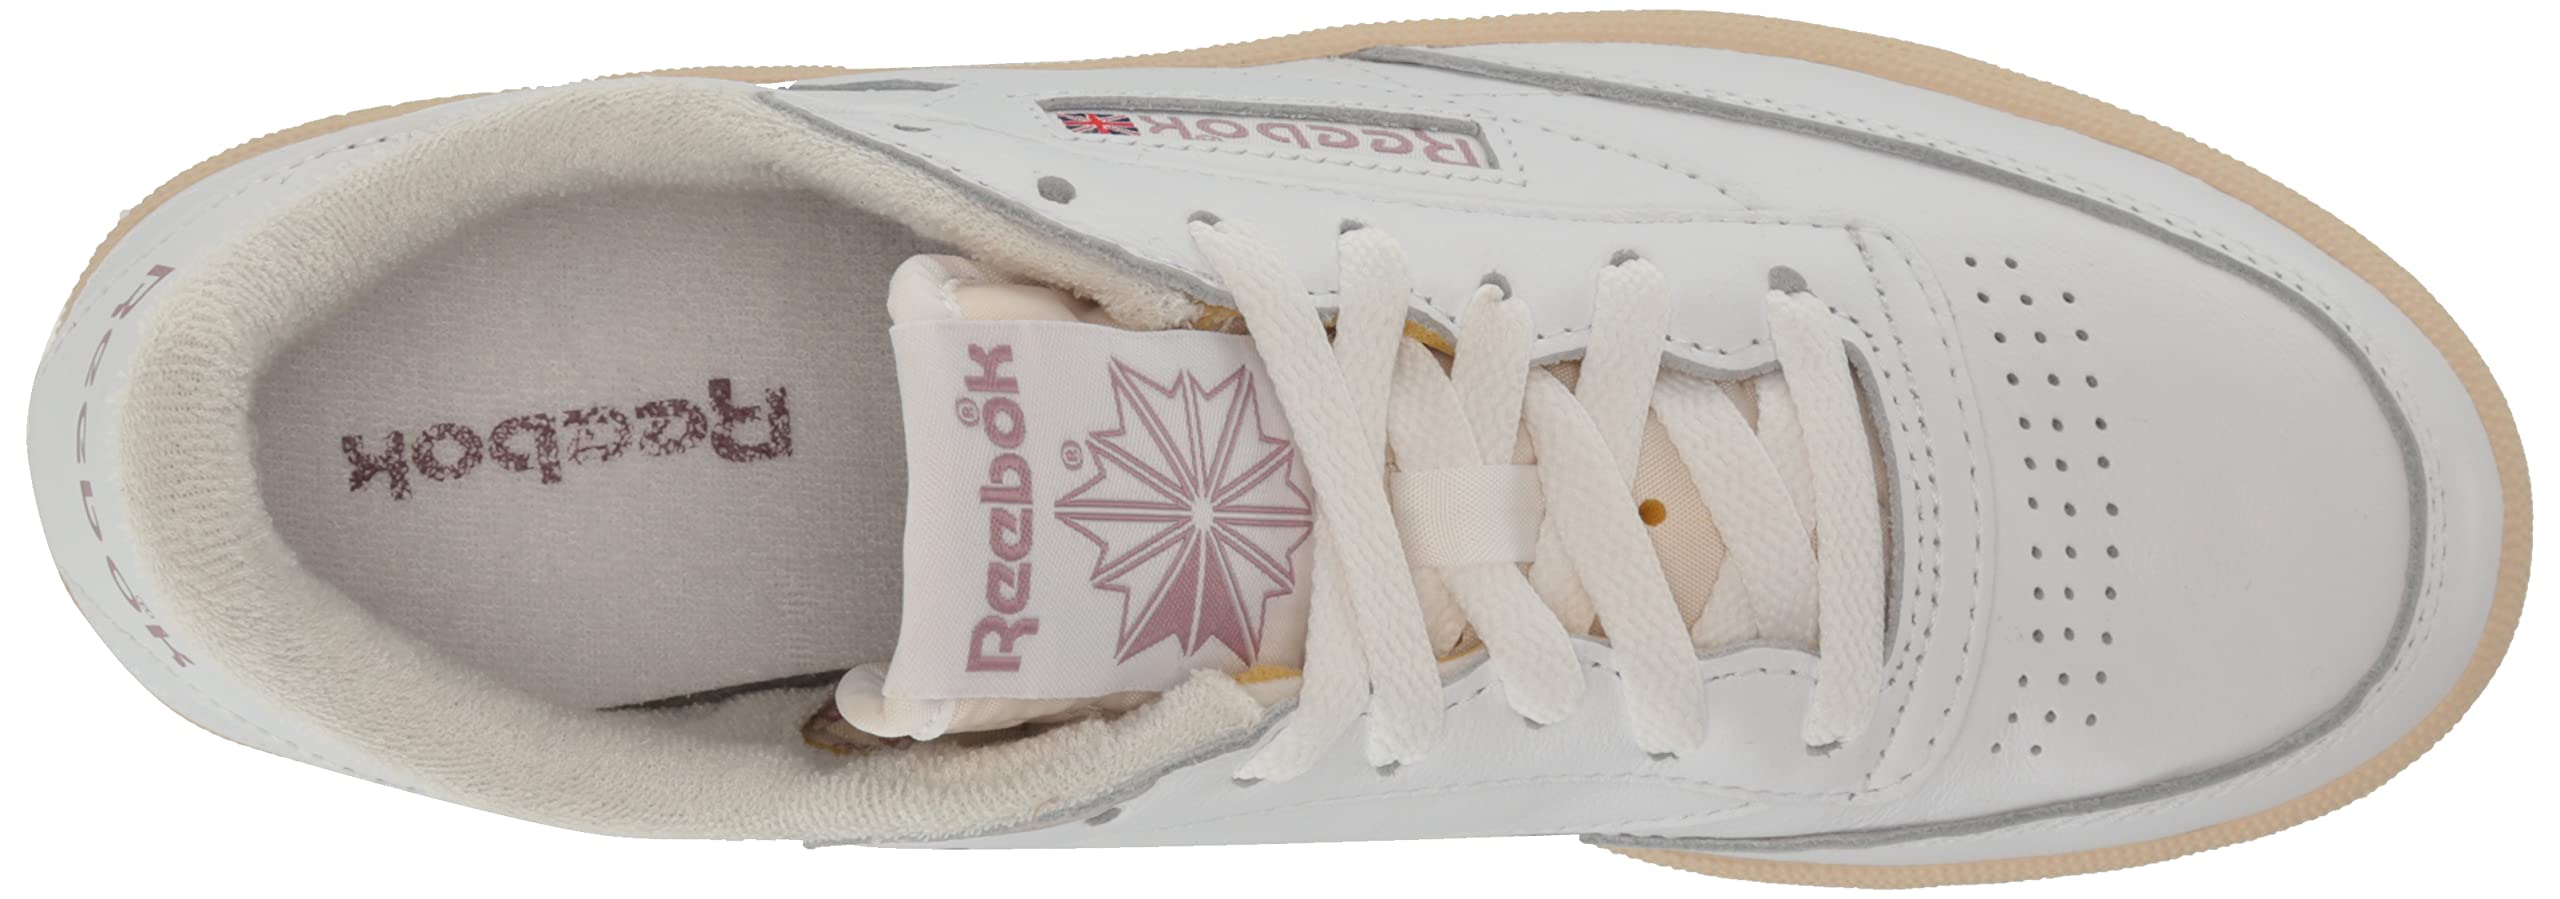 Reebok Women's Club C 85 Vintage Sneaker, White/Chalk/Infused Lilac, 6